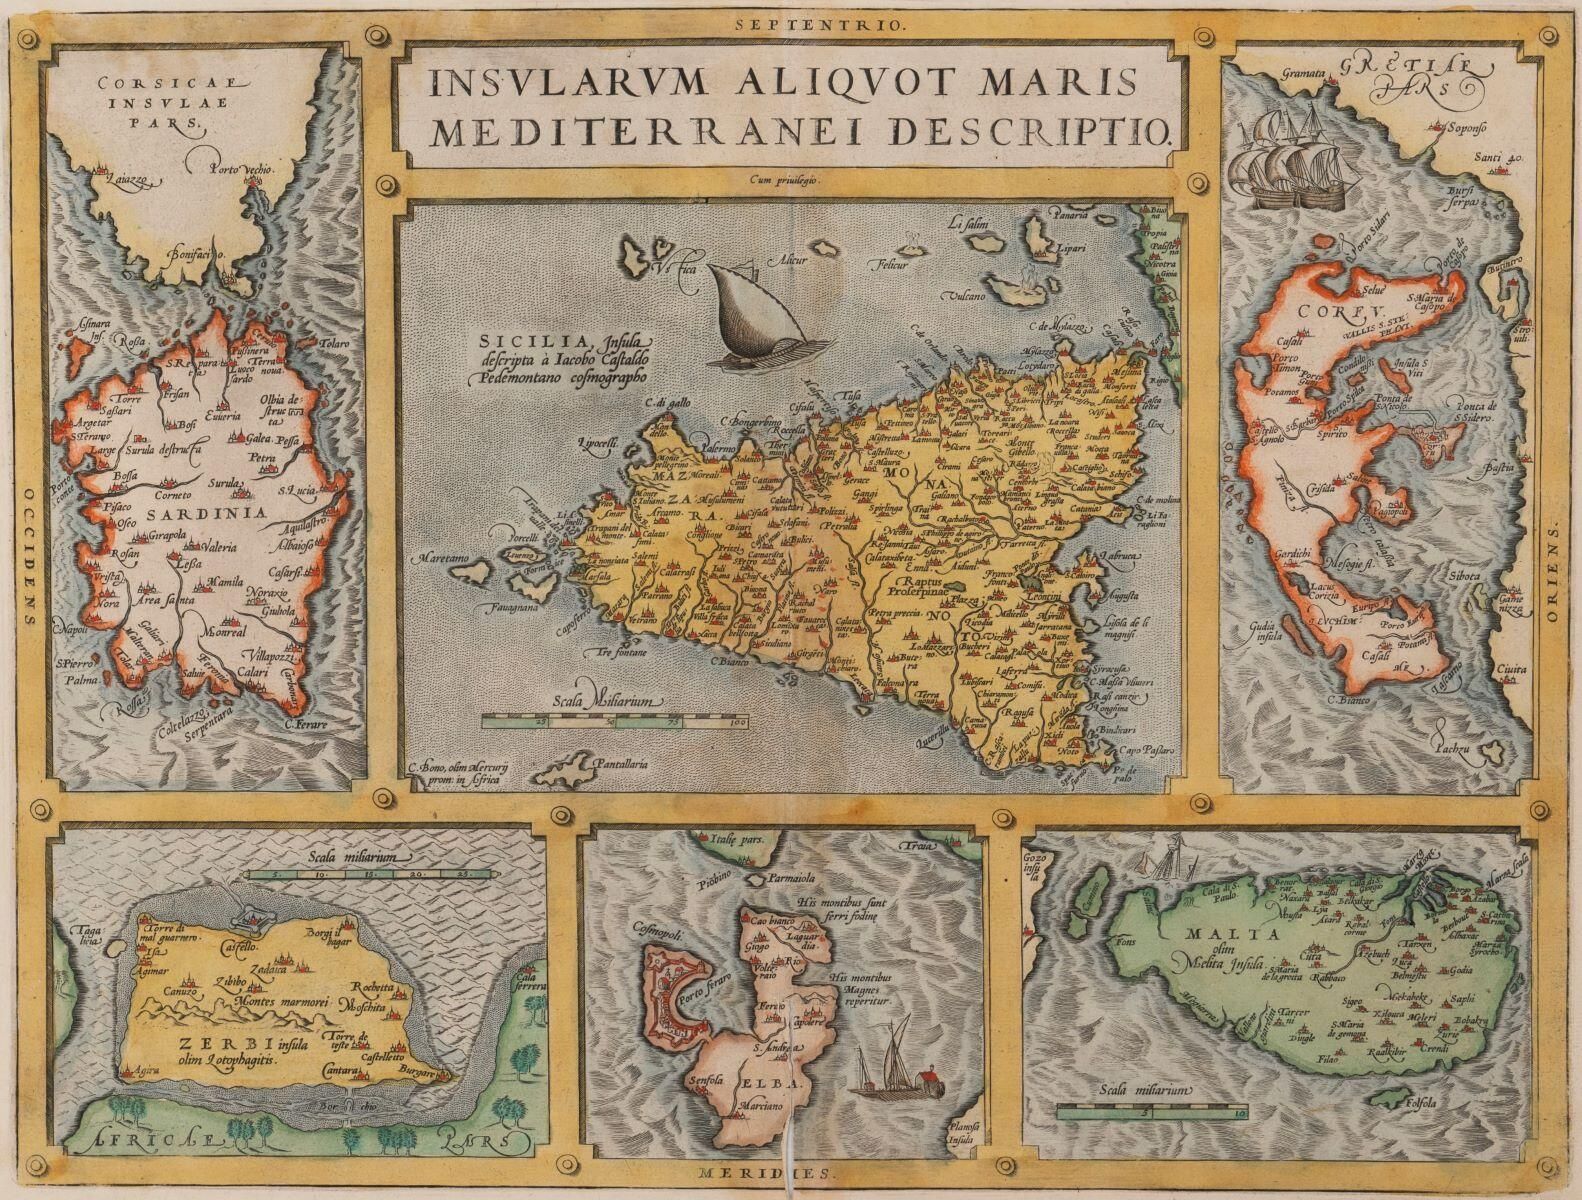 Cartes de provinces italiennes extraites de l'atlas Theatrum Orbis Terrarum (titre factice)